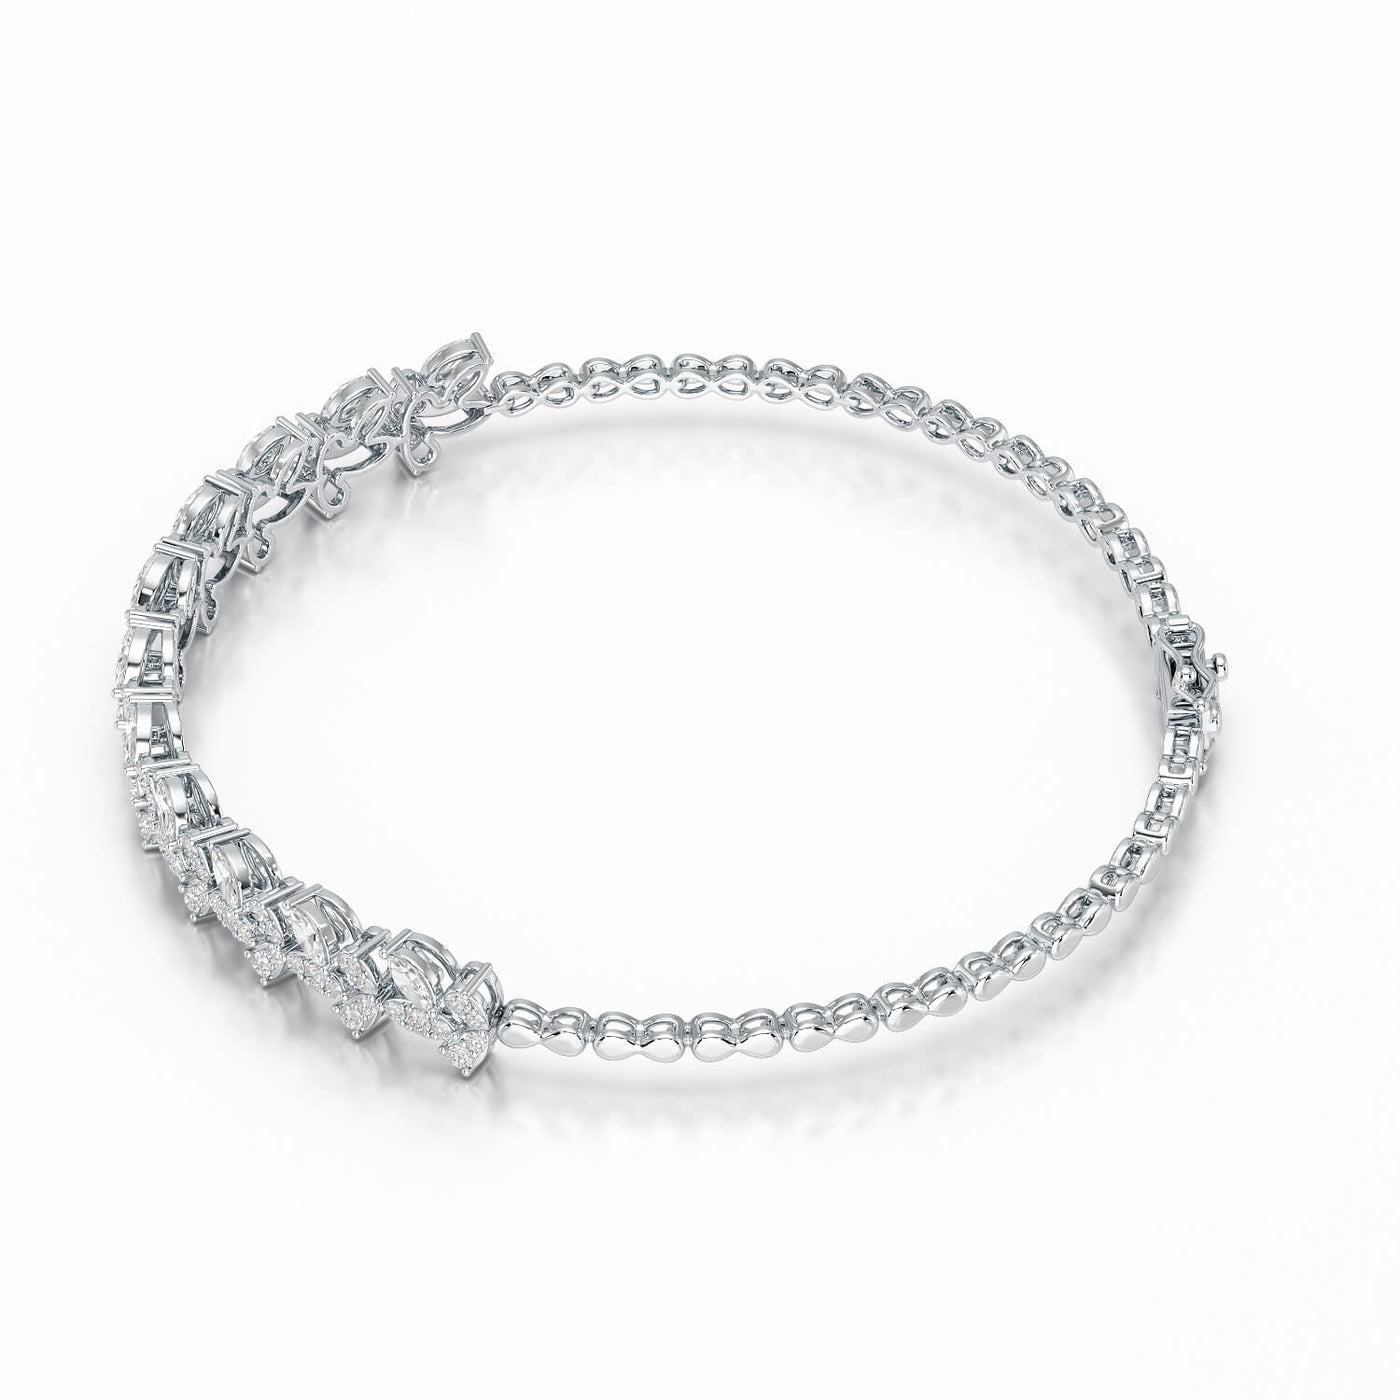 1.95 CT Marquise Cut Diamond Lab Created Bracelet